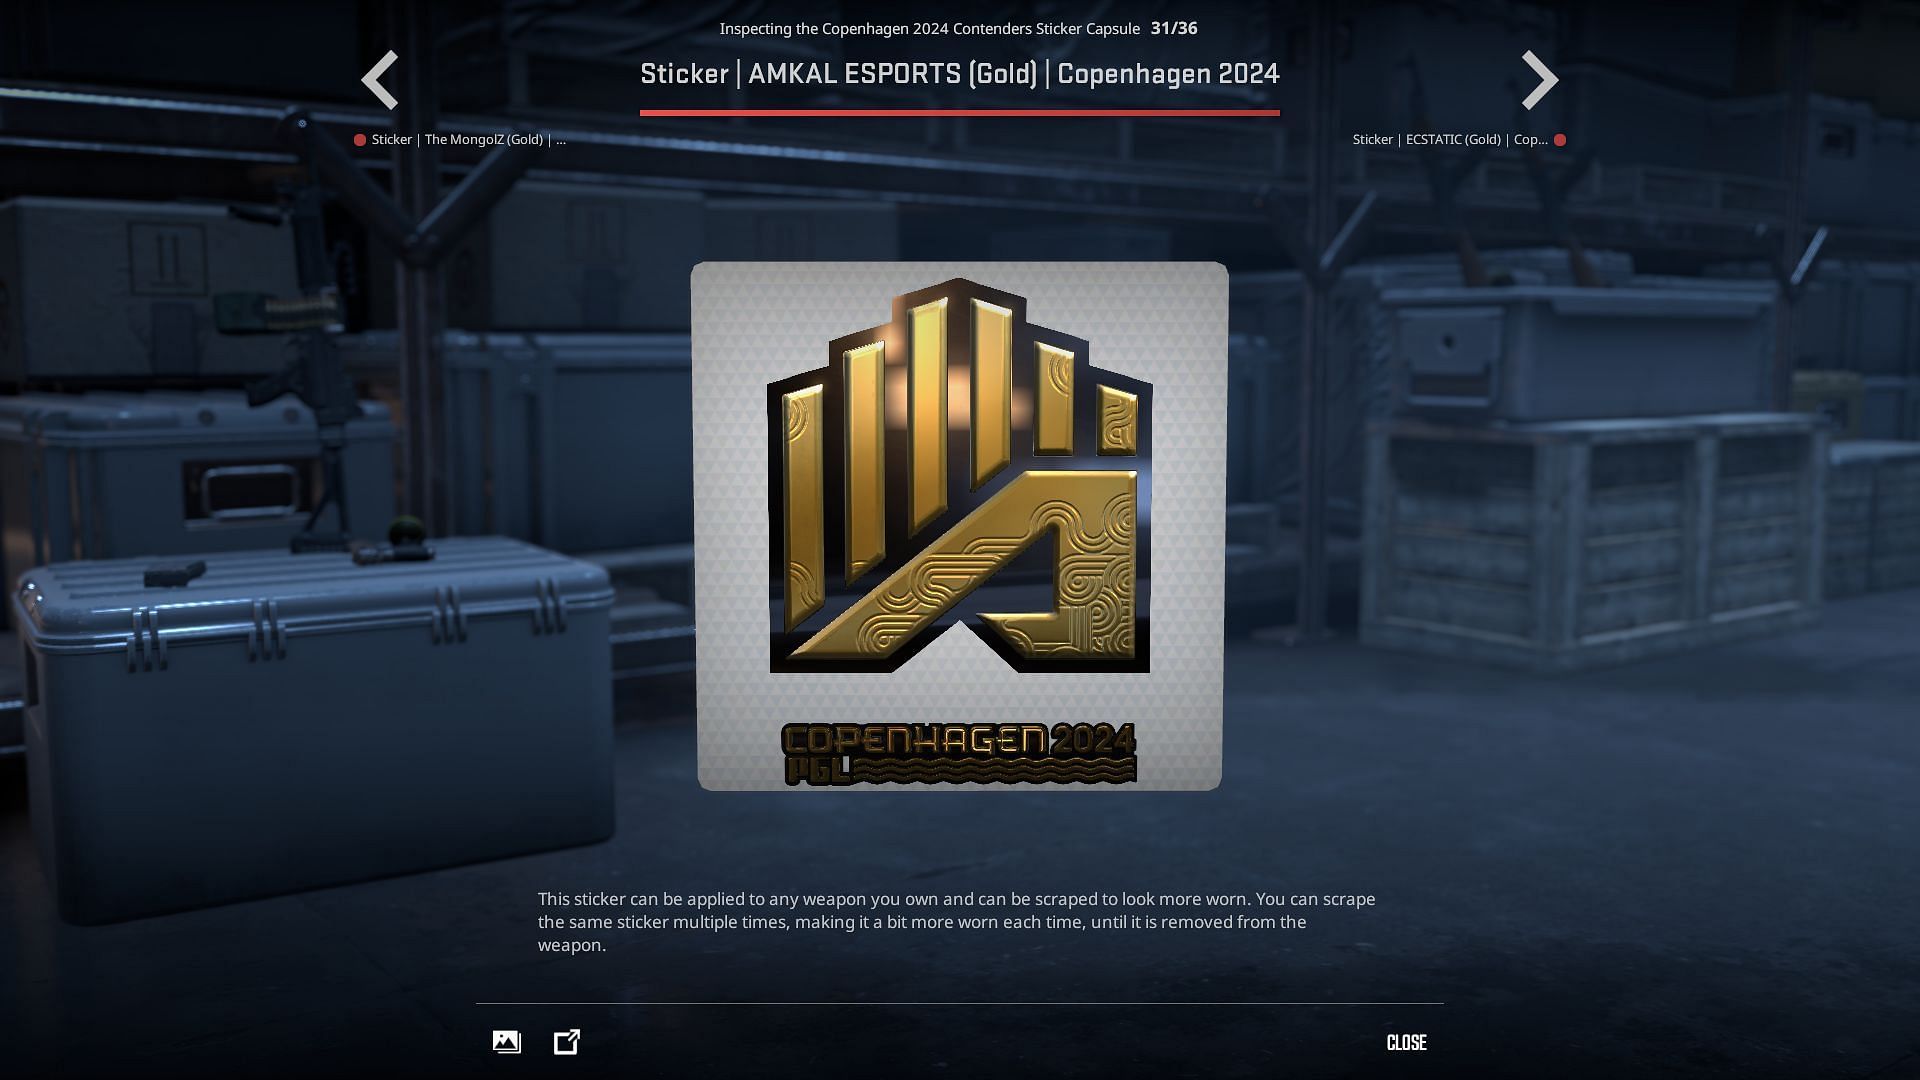 AMKAL Esports Gold sticker (Image via Valve)